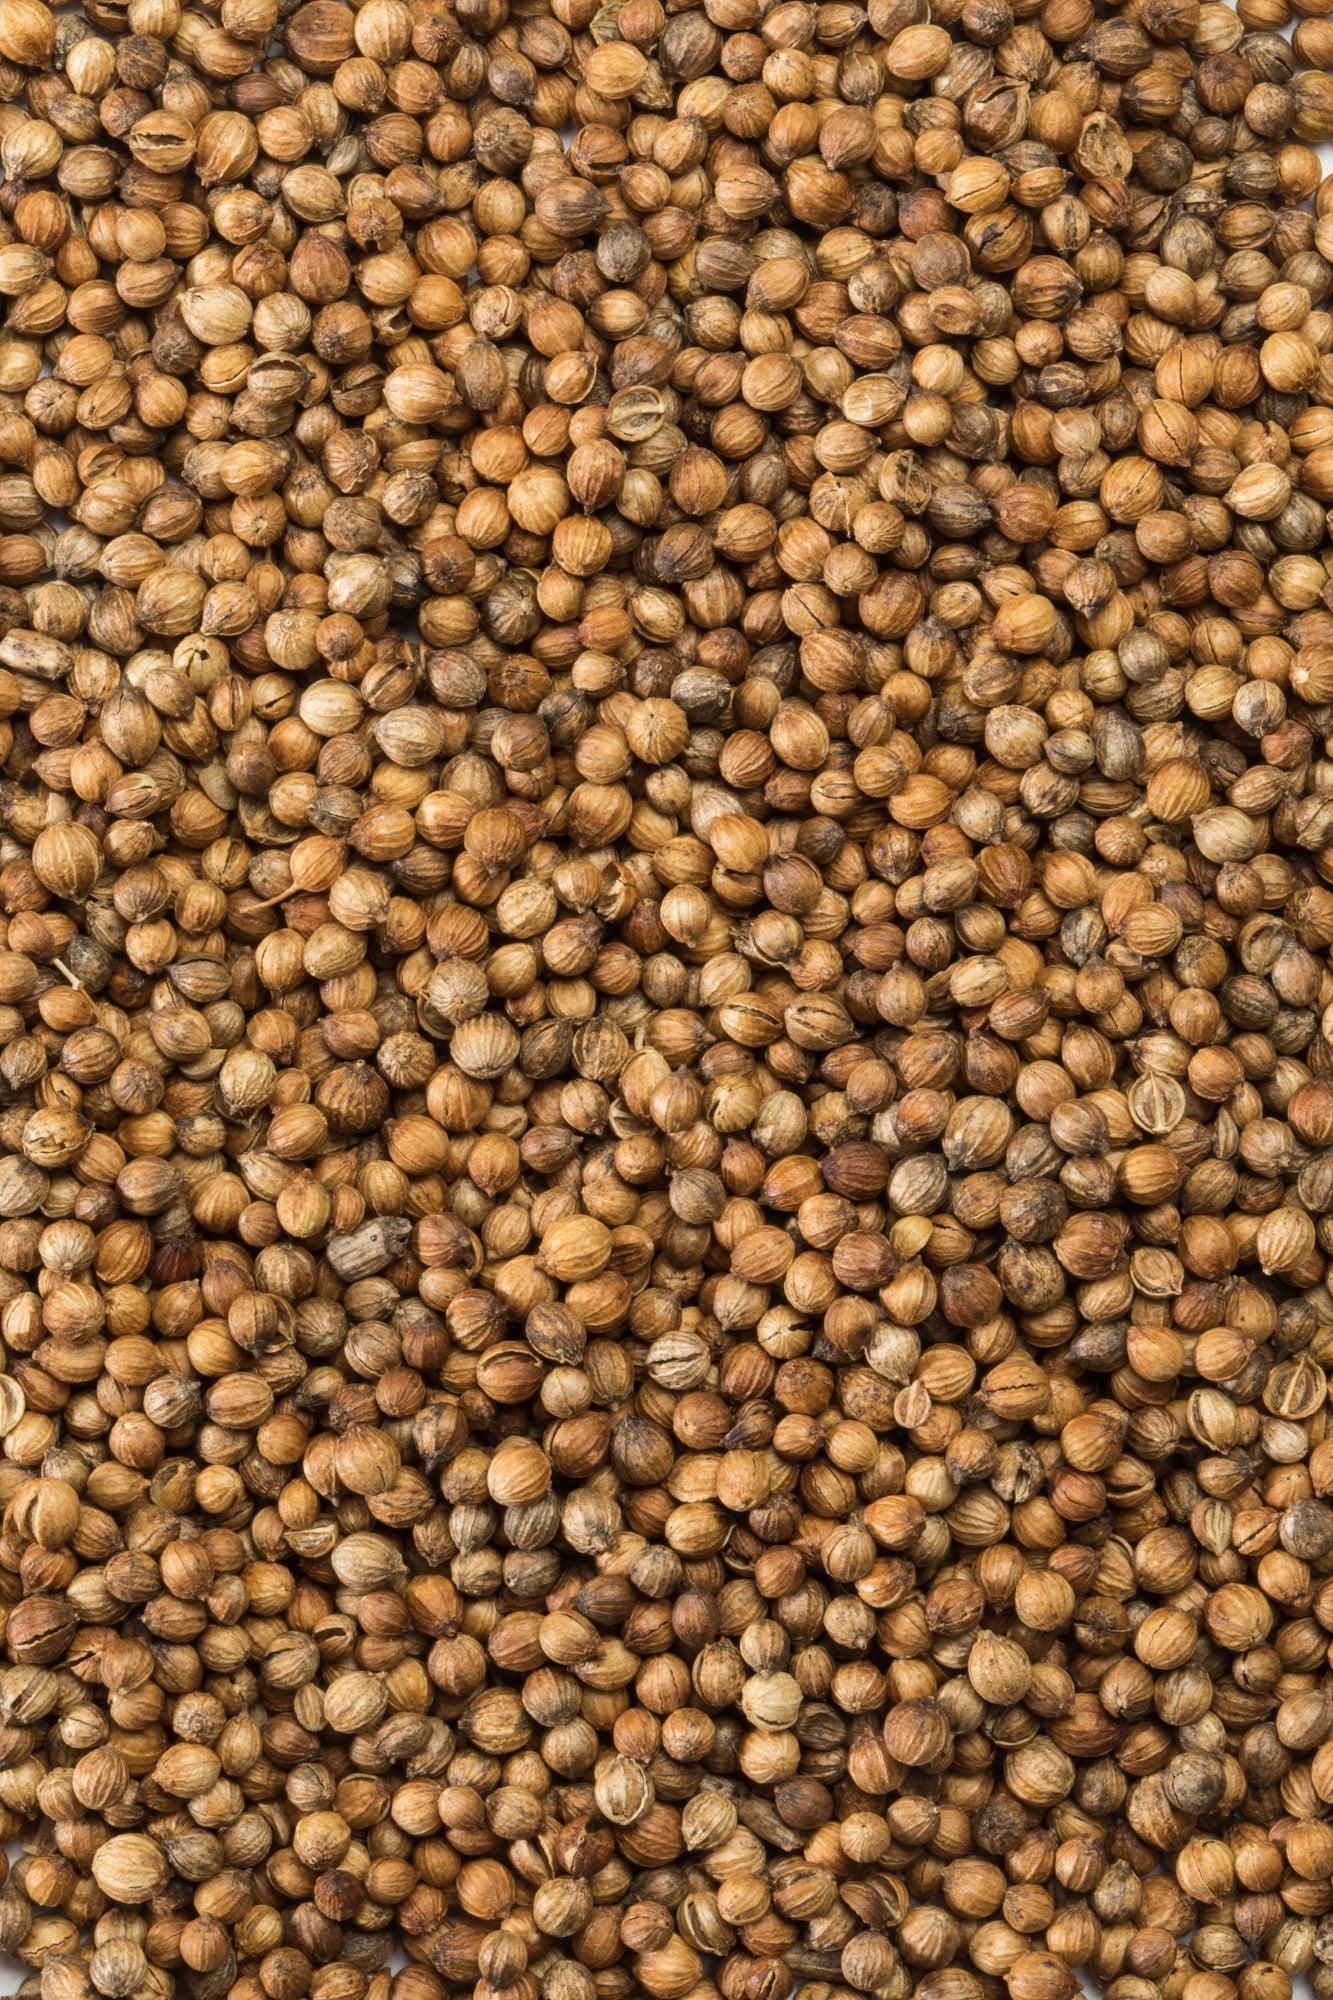 McCormick Gourmet Organic Coriander Seed, 0.87 oz Mixed Spices & Seasonings - image 2 of 11